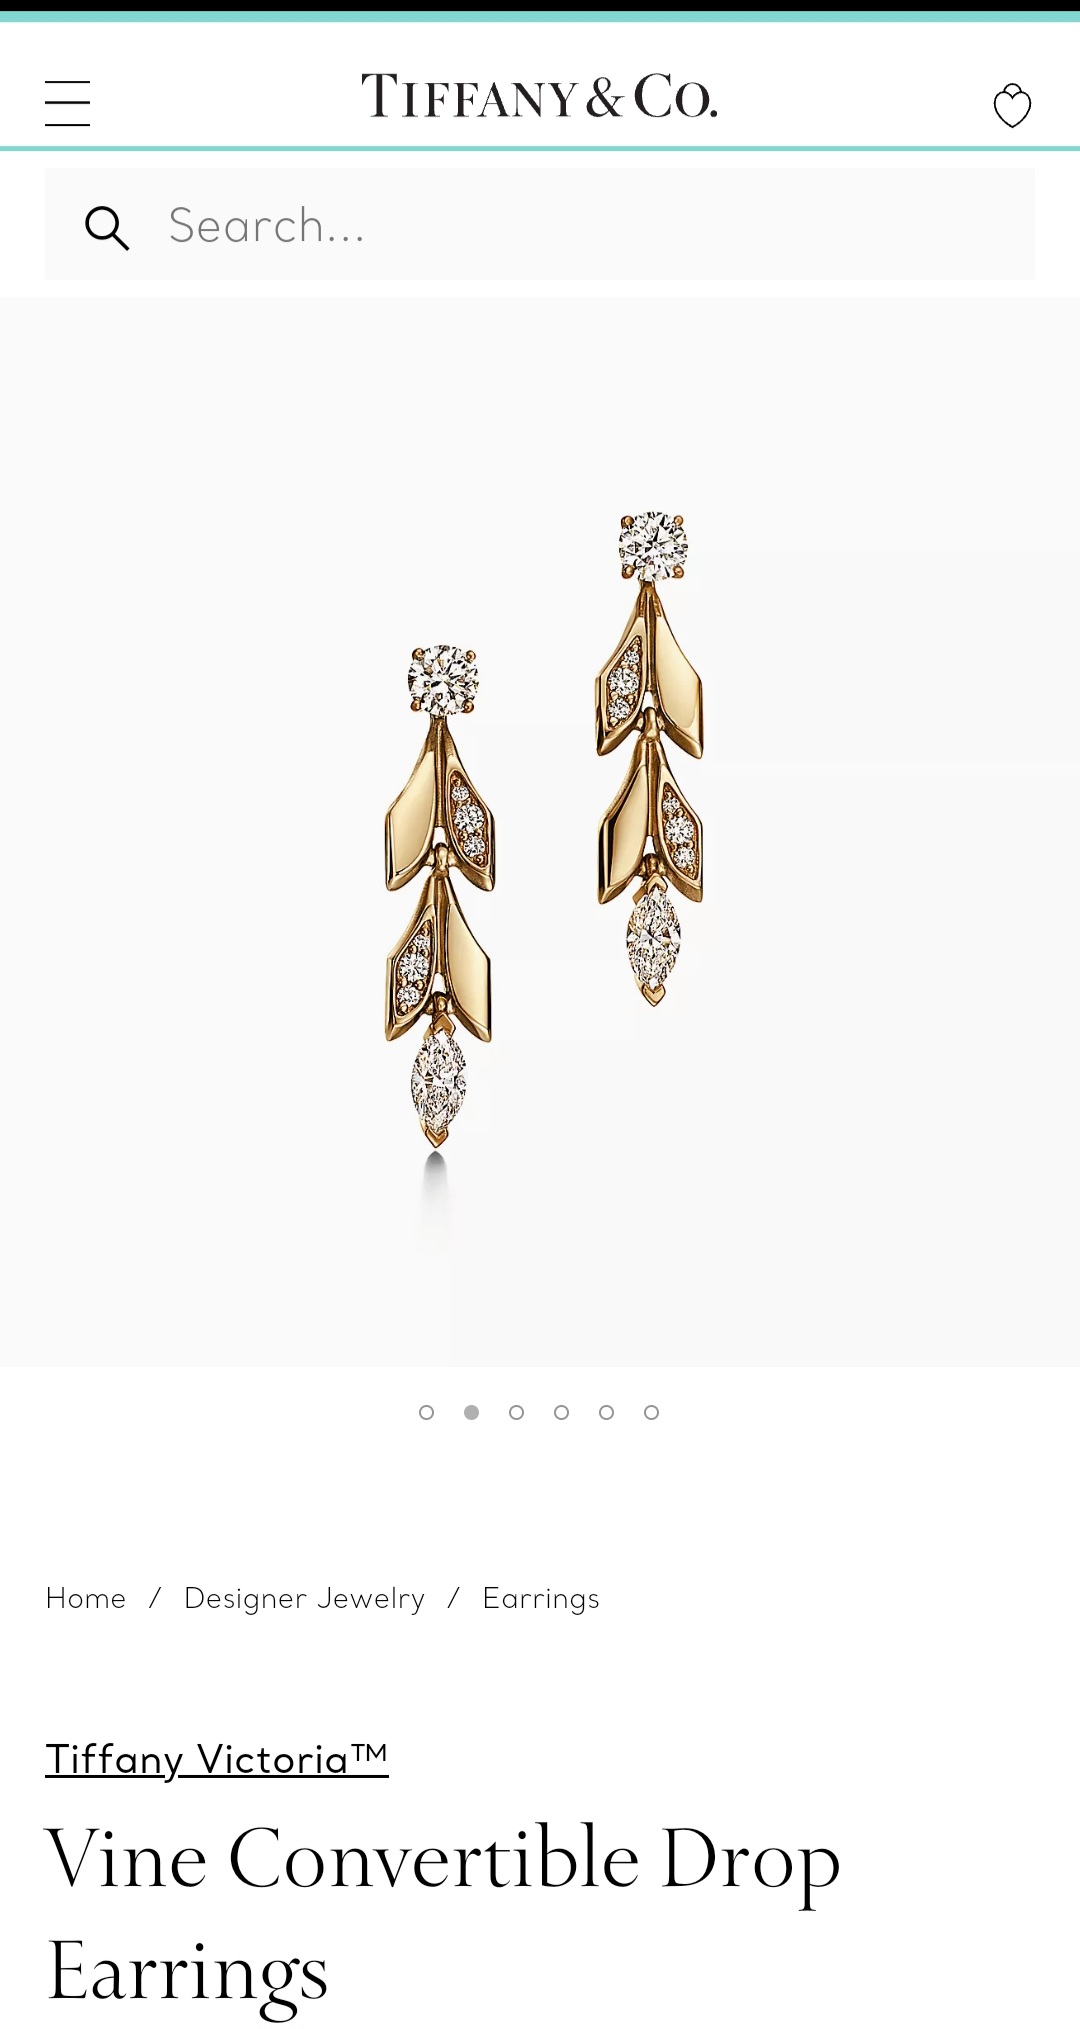 Tiffany & co Victoria Vine Convertible Drop Earrings